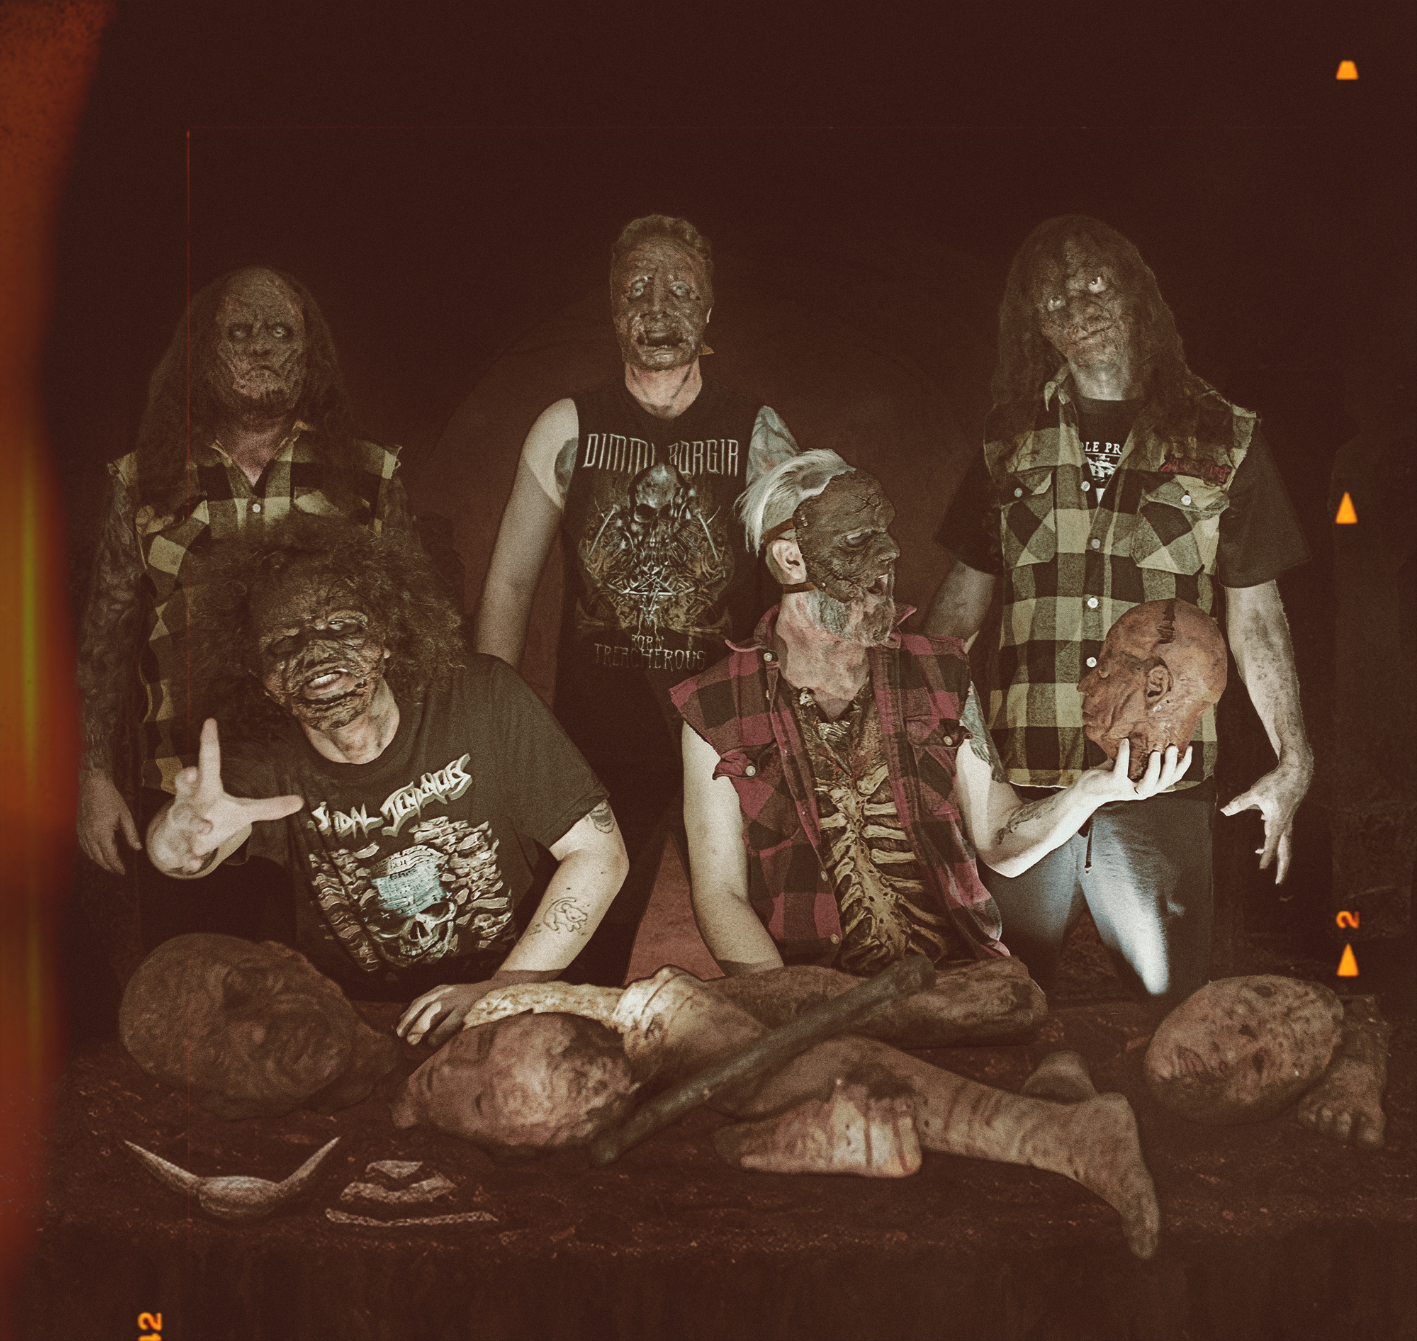 Zombie Cookbook: Novo álbum “Horroris Causa”, será lançado na sexta